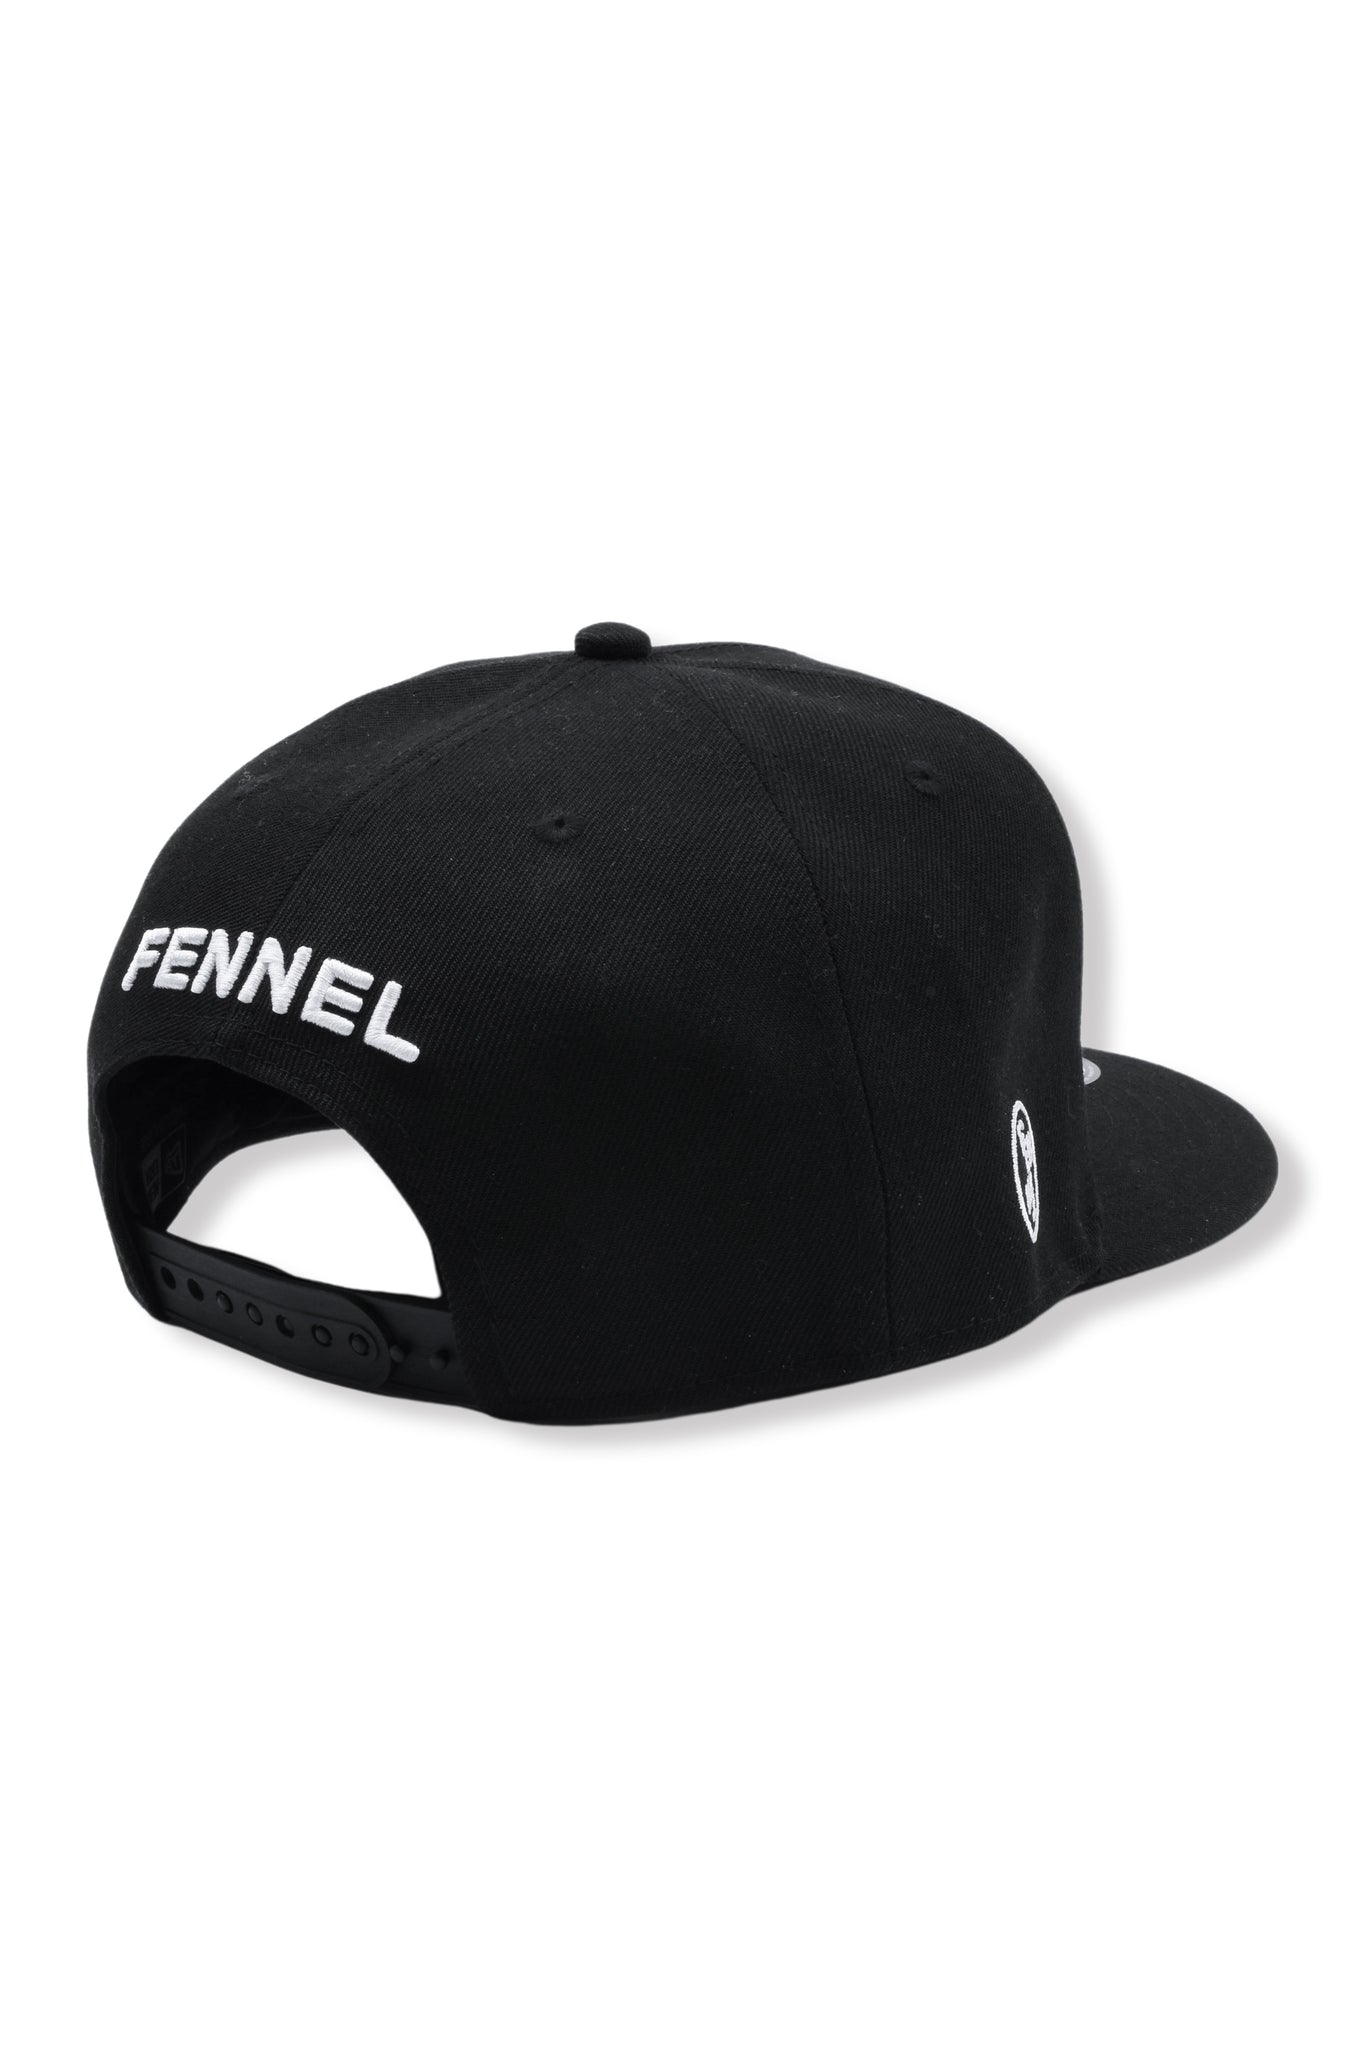 NEWERA | FENNEL 9FIFTY/950 BASEBALL CAP